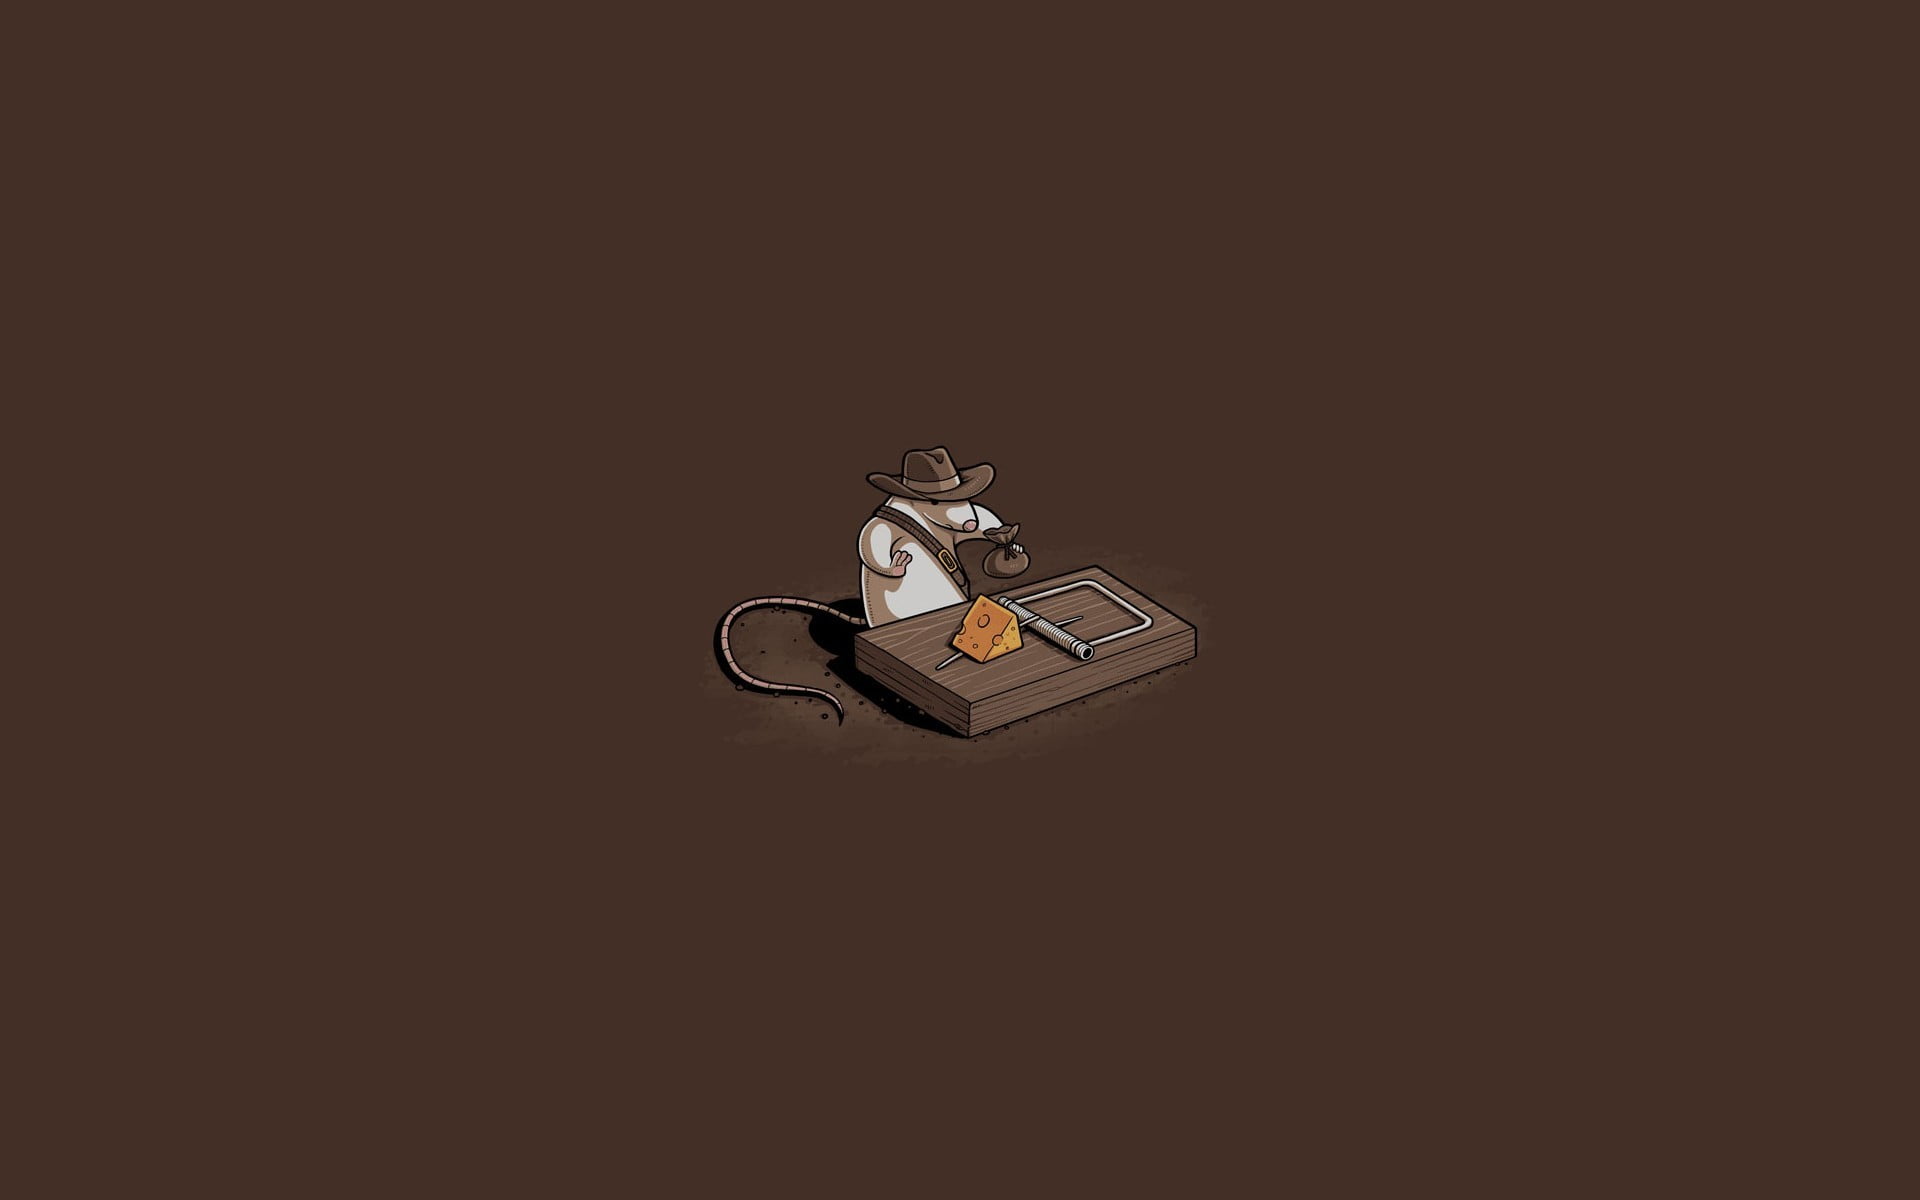 inspector mouse illustration, humor, Indiana Jones, mice, minimalism